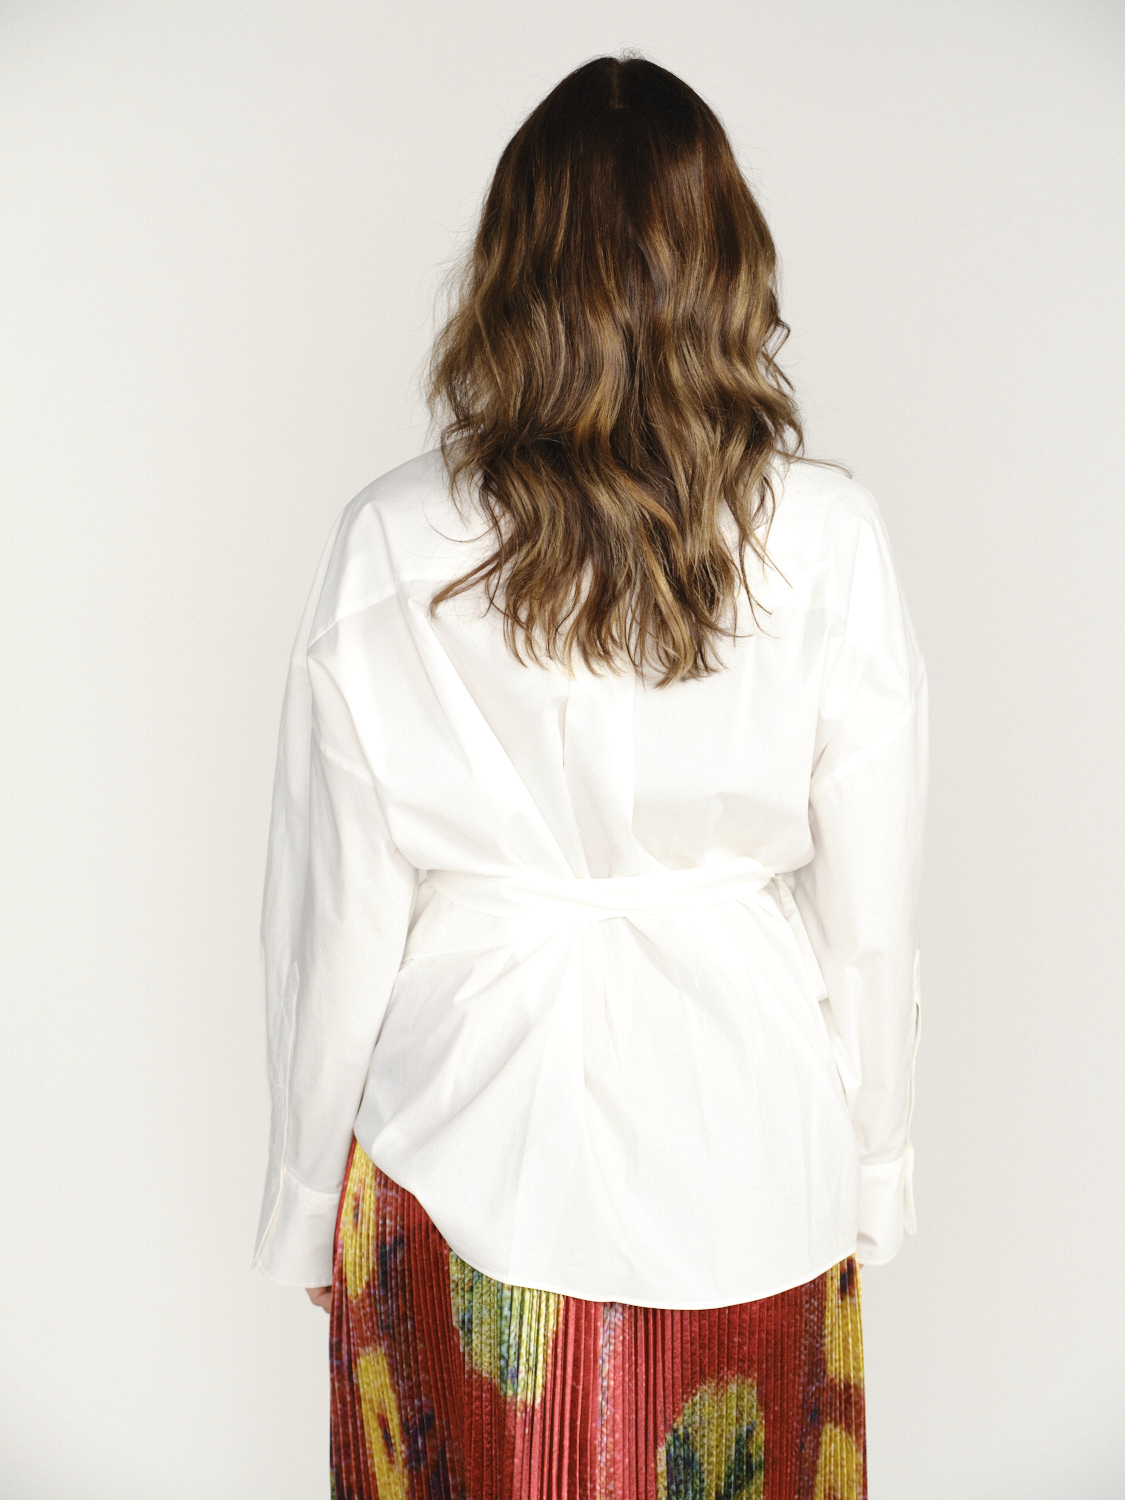 Dorothee Schumacher Poplin - Classic blouse with tie detail white 34